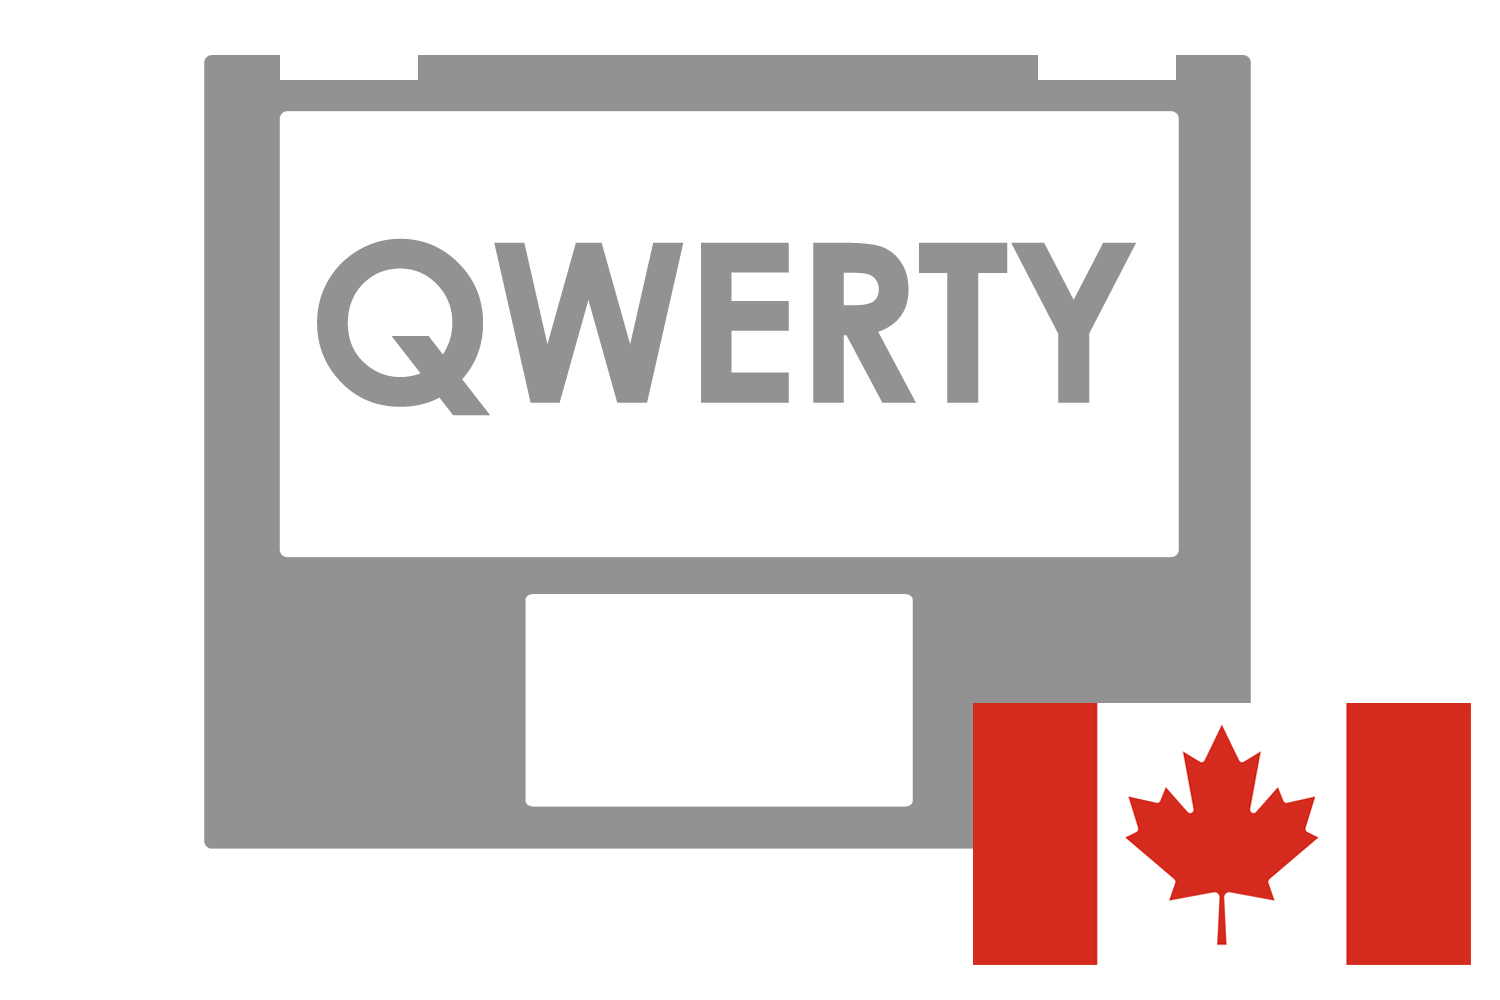 Asus Black Canadian QWERTY keyboard